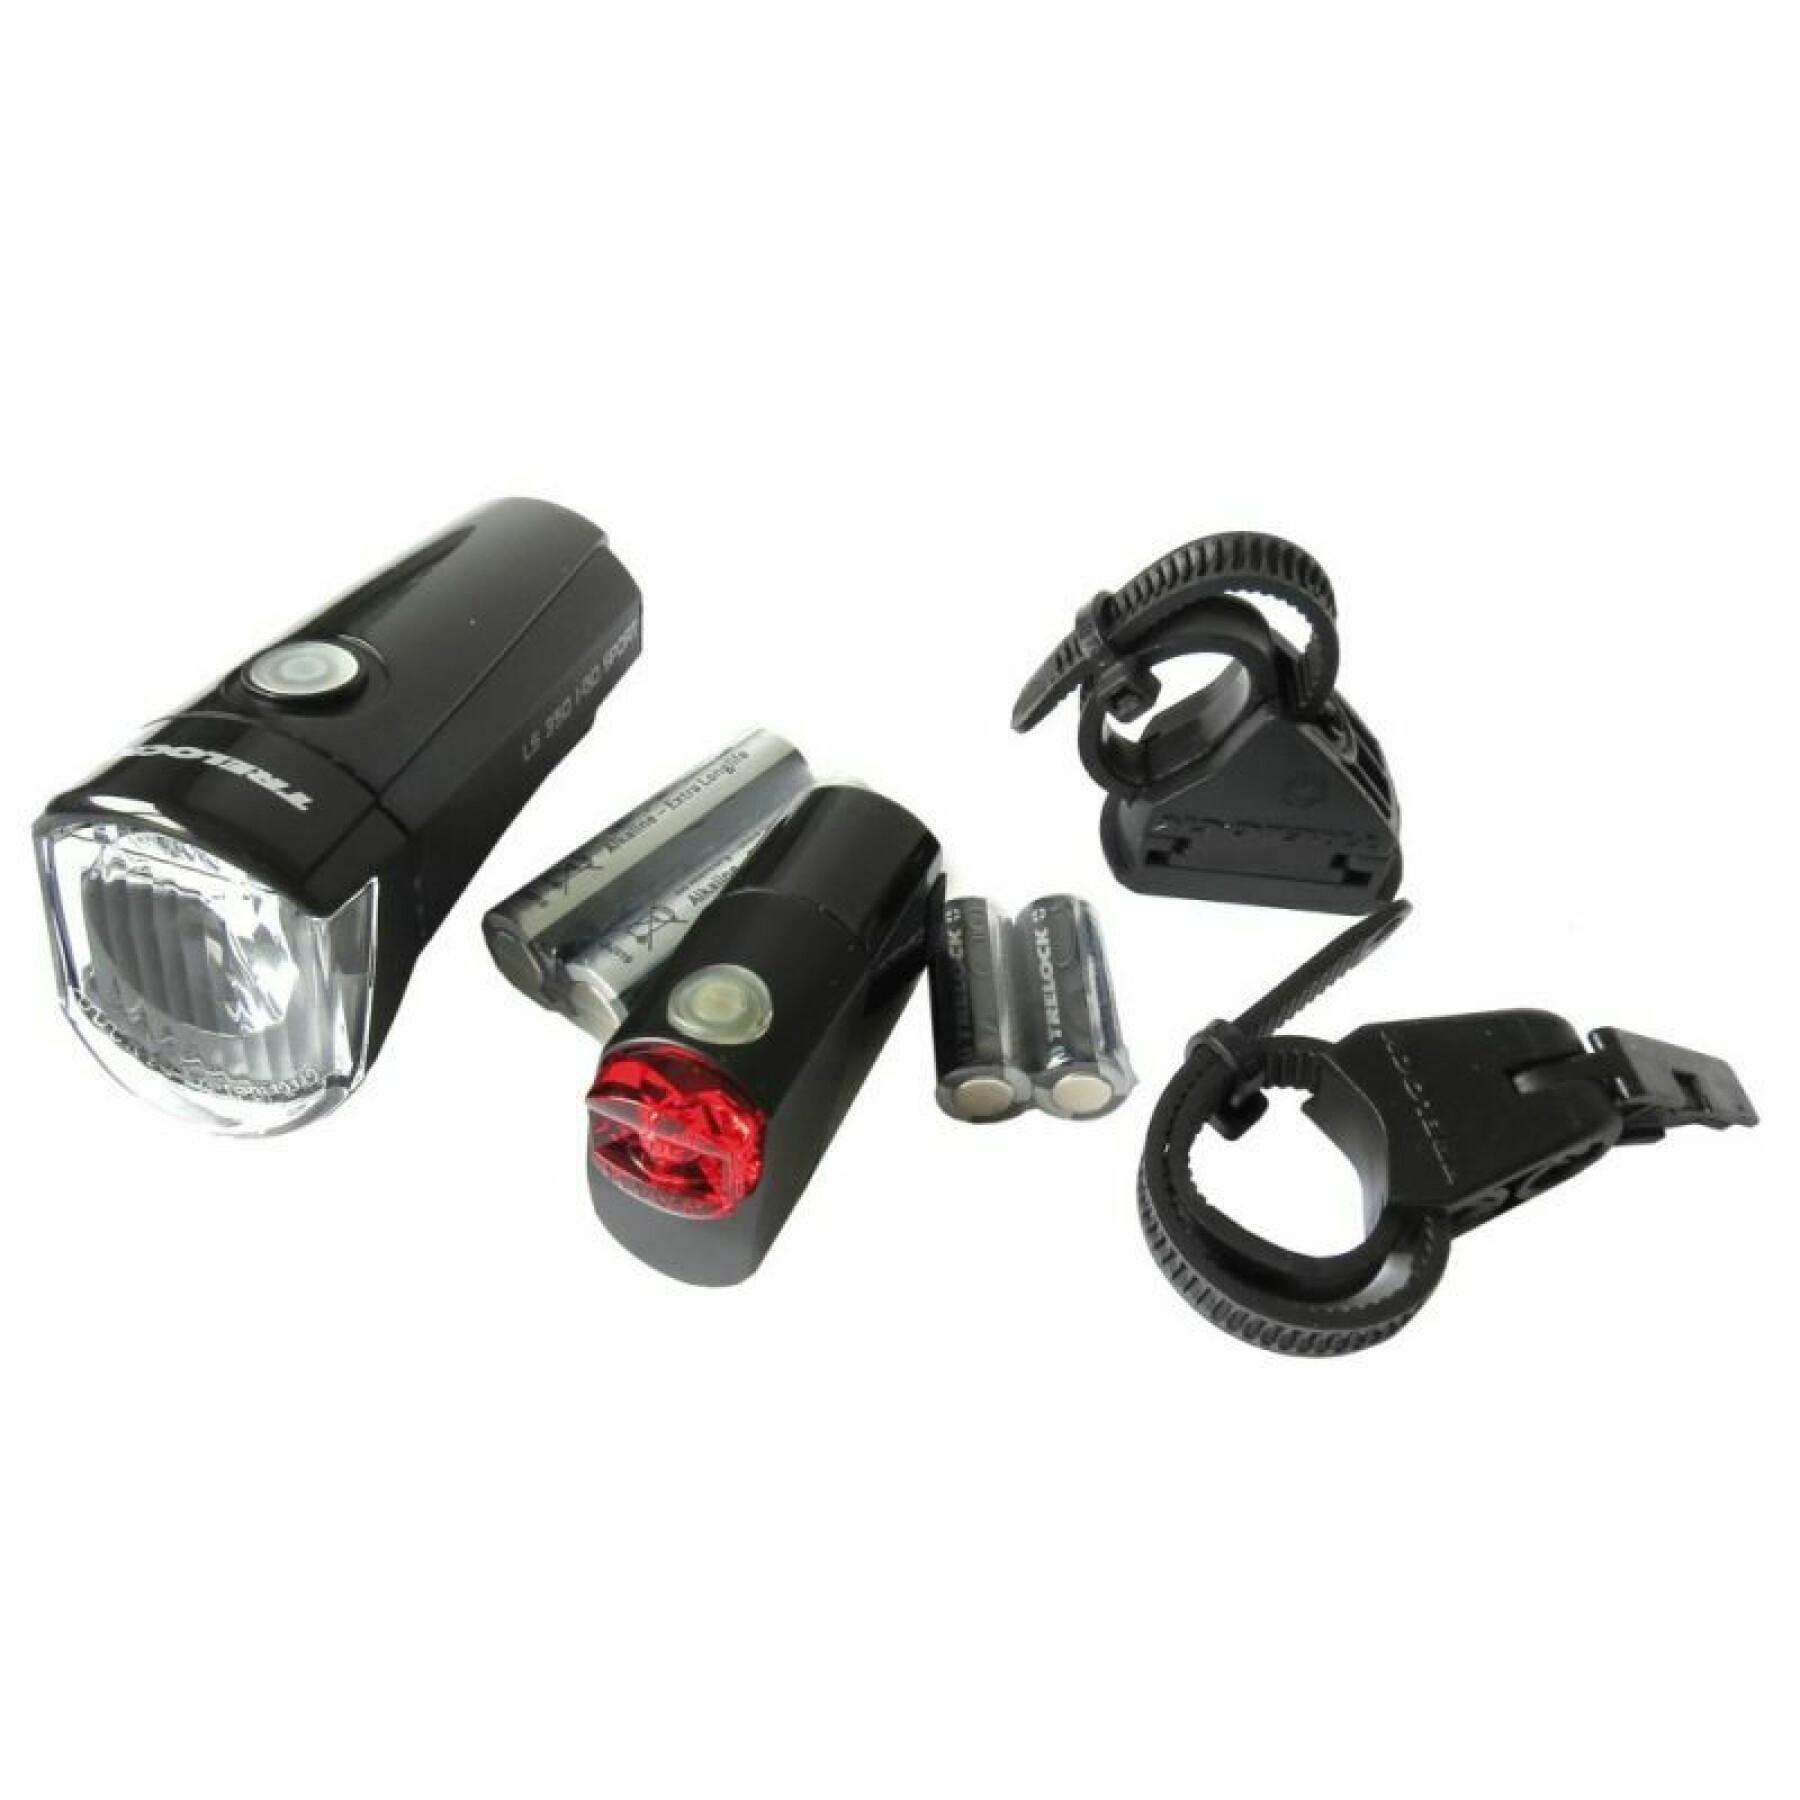 Battery light kit Trelock i-go sport ls350 + ls710 reego